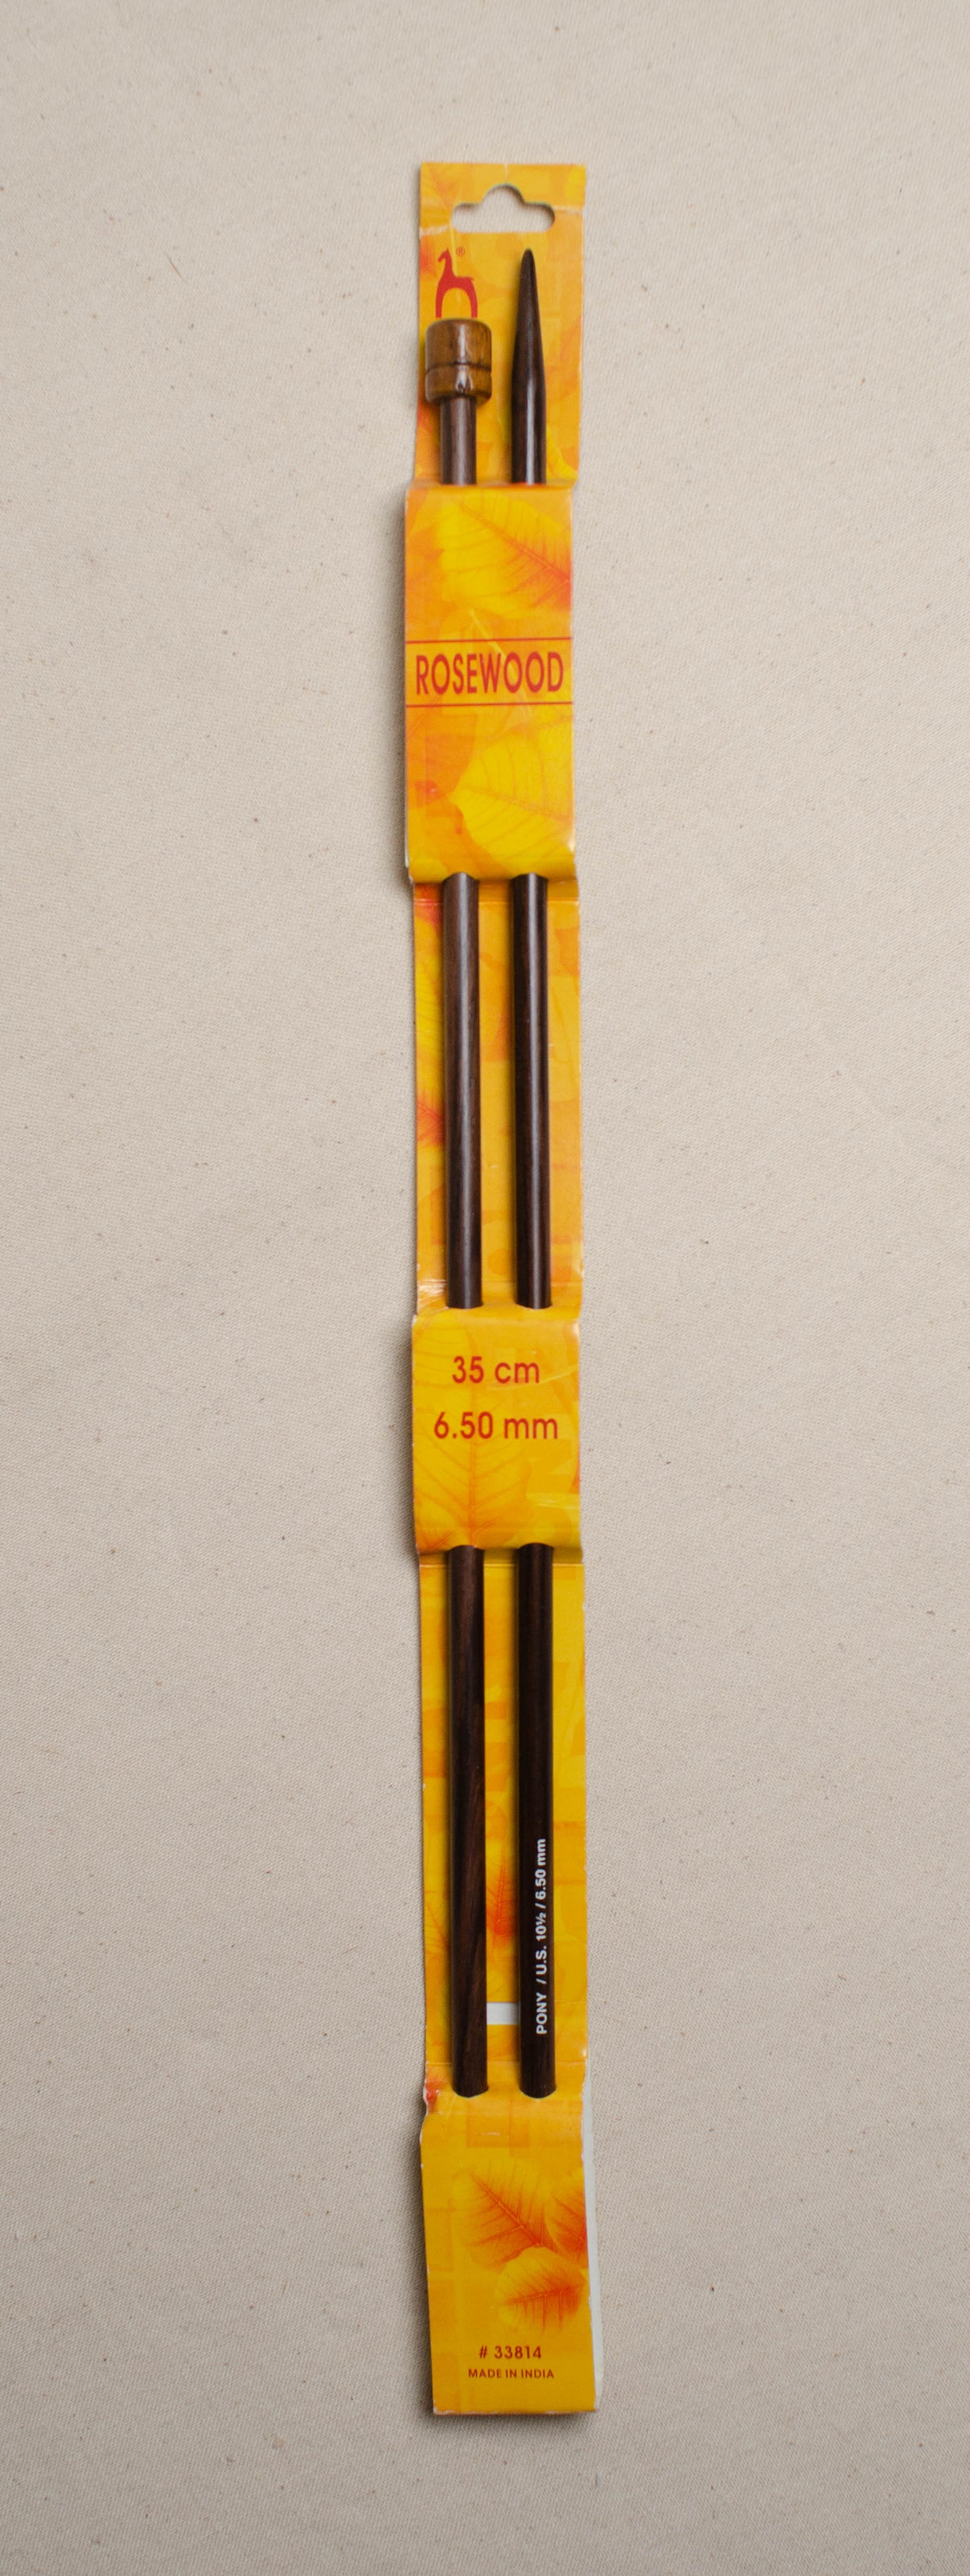 Pony Rosewood 35cm Knitting Needles - 35cm X 6.50mm